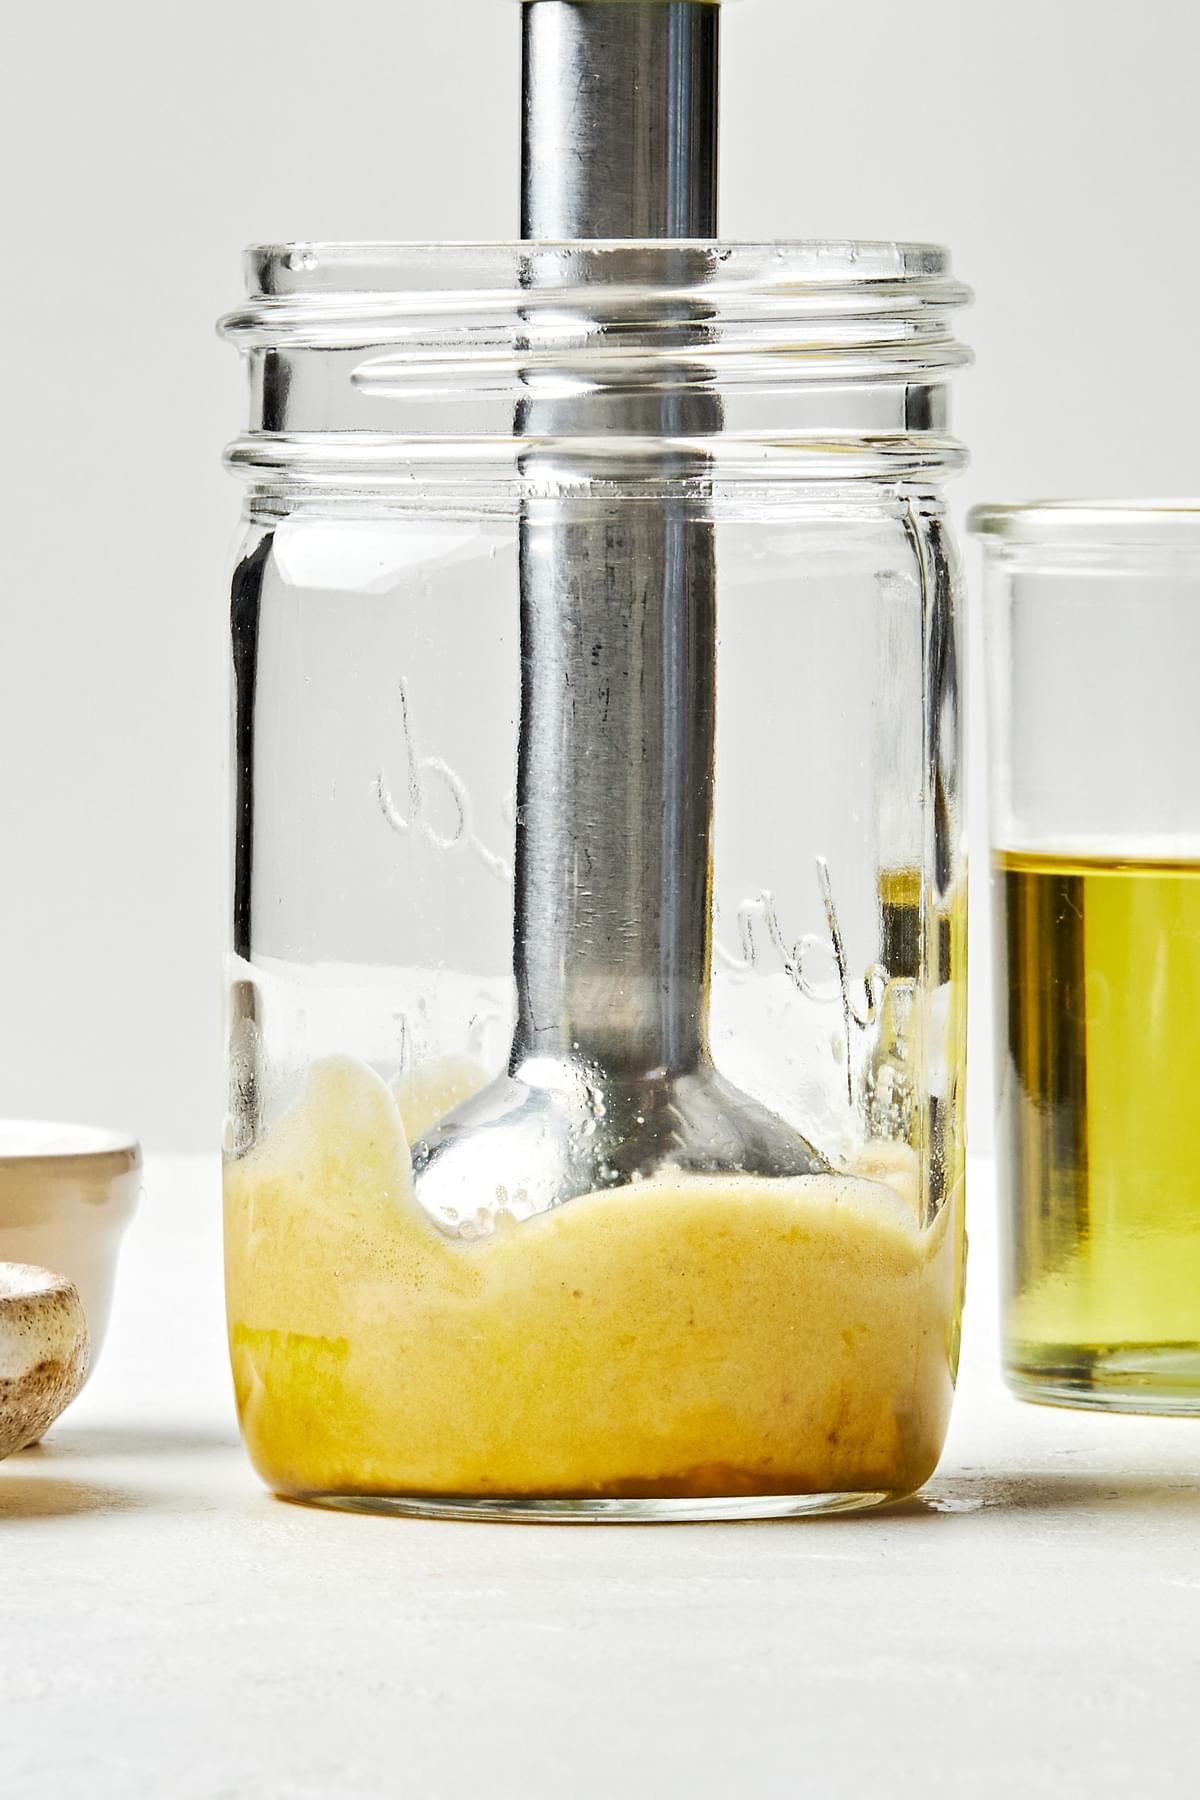 egg yolks, anchovies, garlic, lemon juice & salt being blended together in a glass jar with an immersion blender